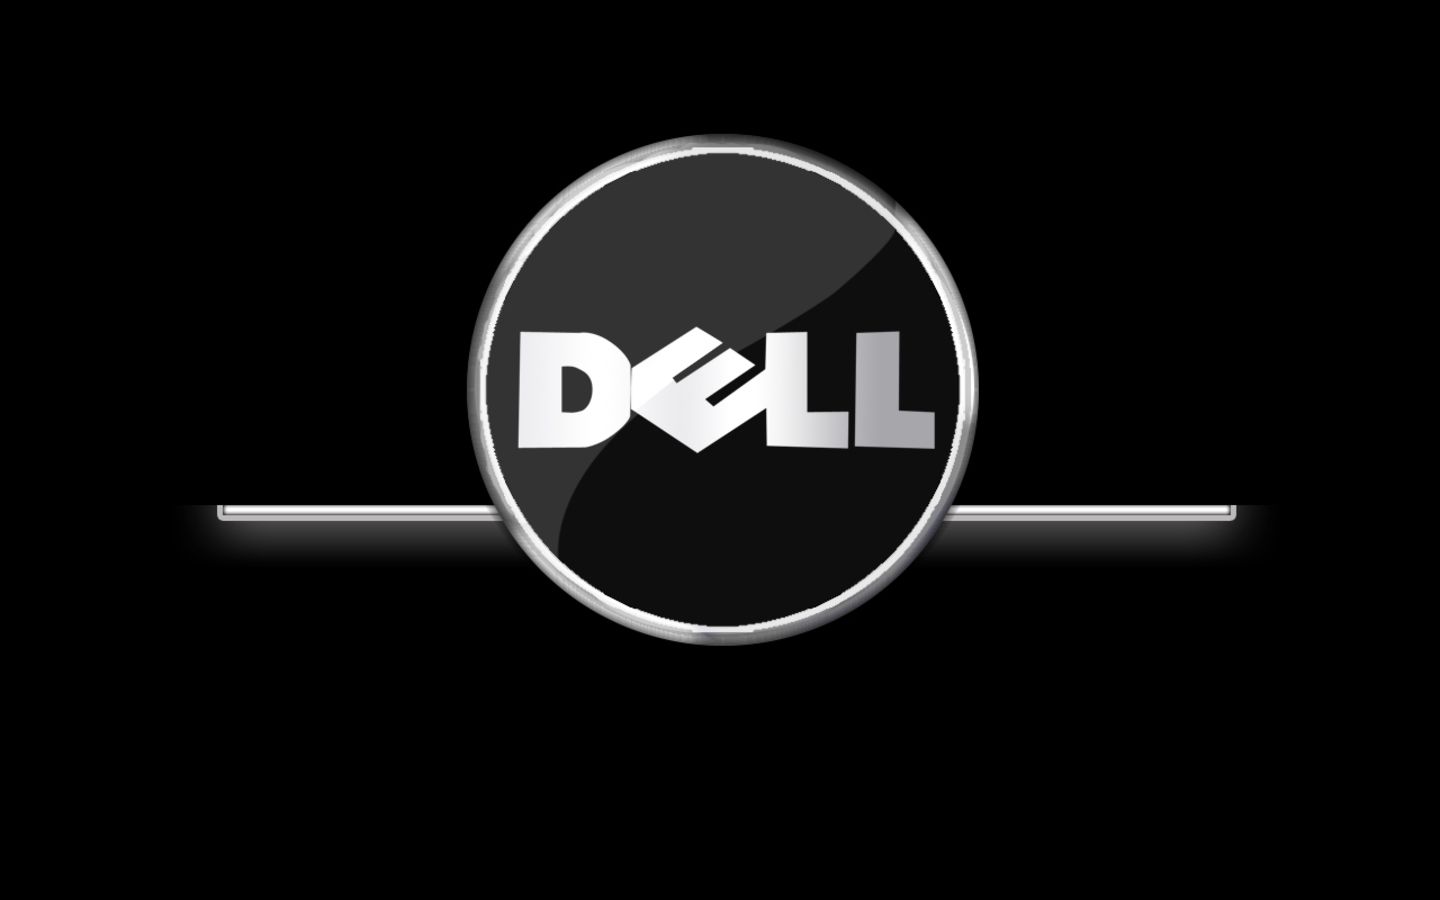 Dell Brand Logo Laptop Wallpaper Backgrounds #20432 Wallpaper ...